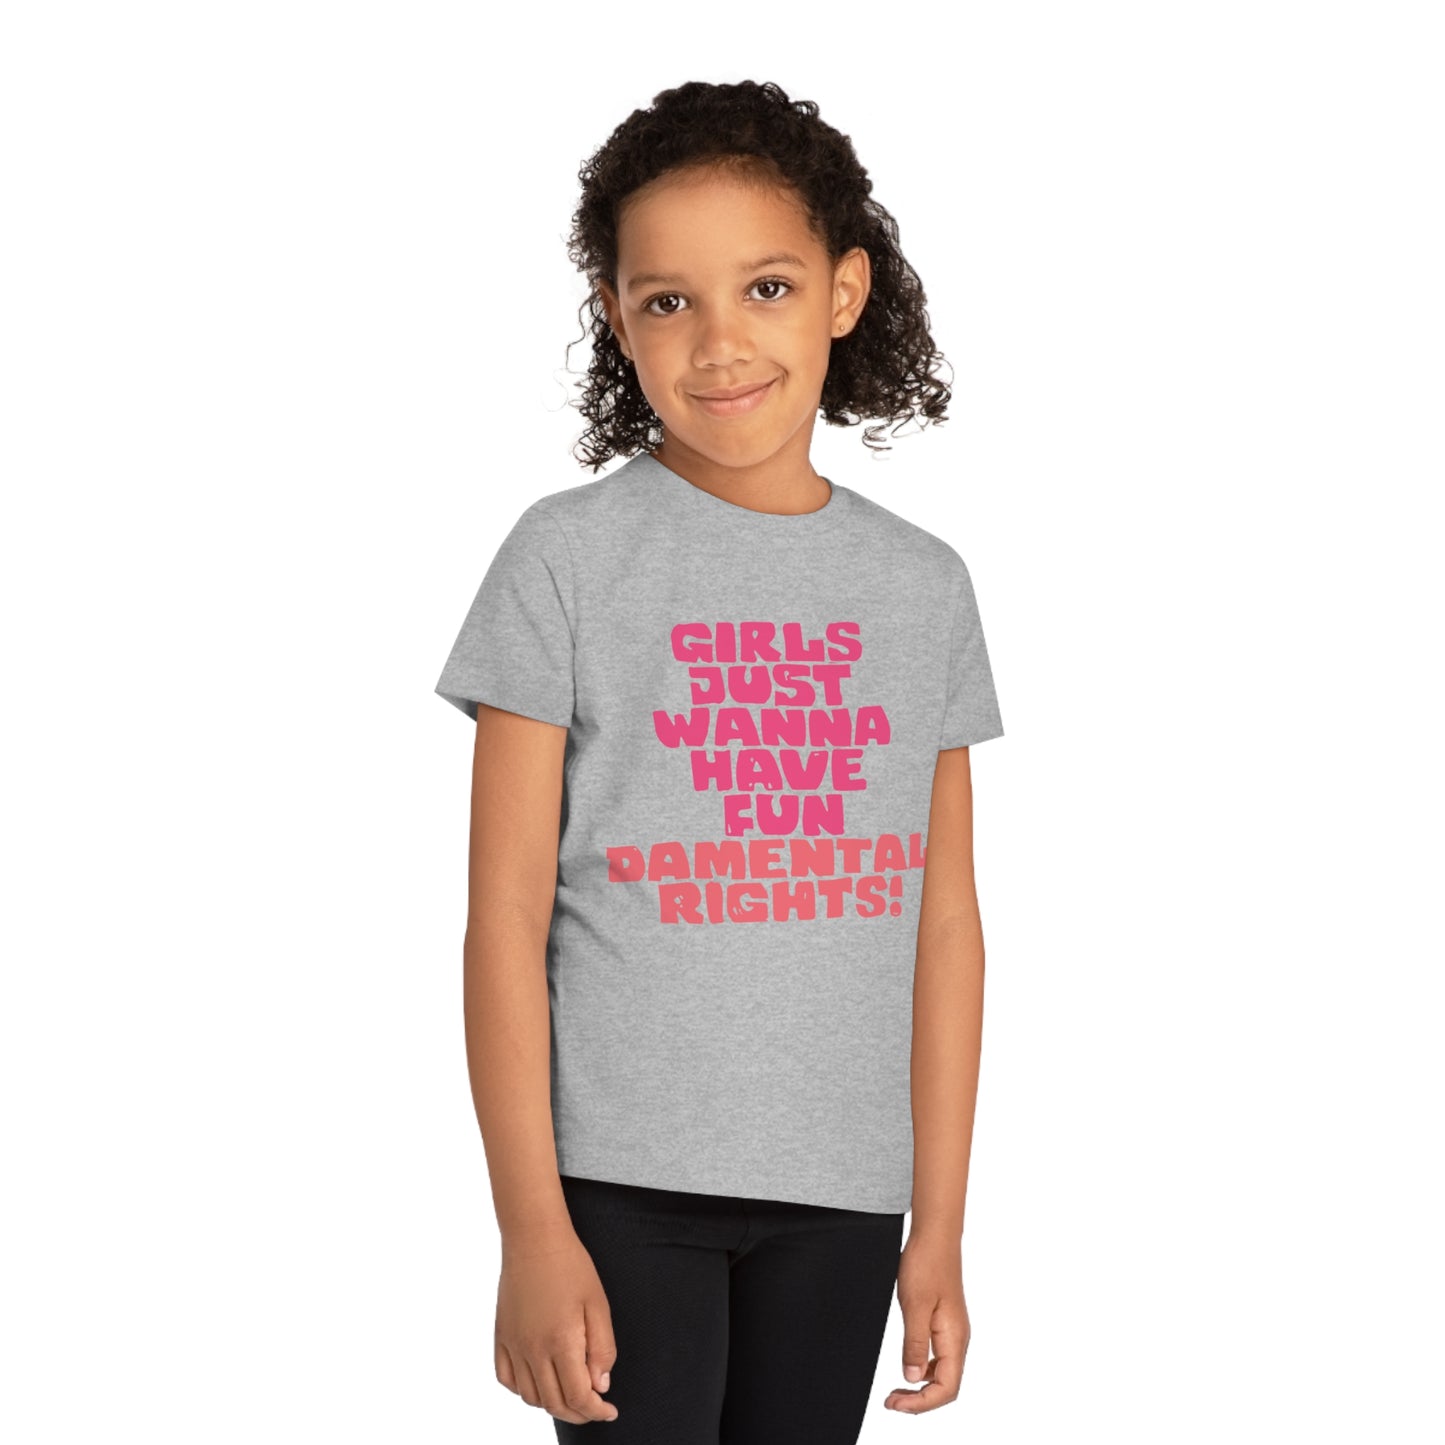 Kids' T-Shirt - Girls - Organic cotton Stanley & Stella